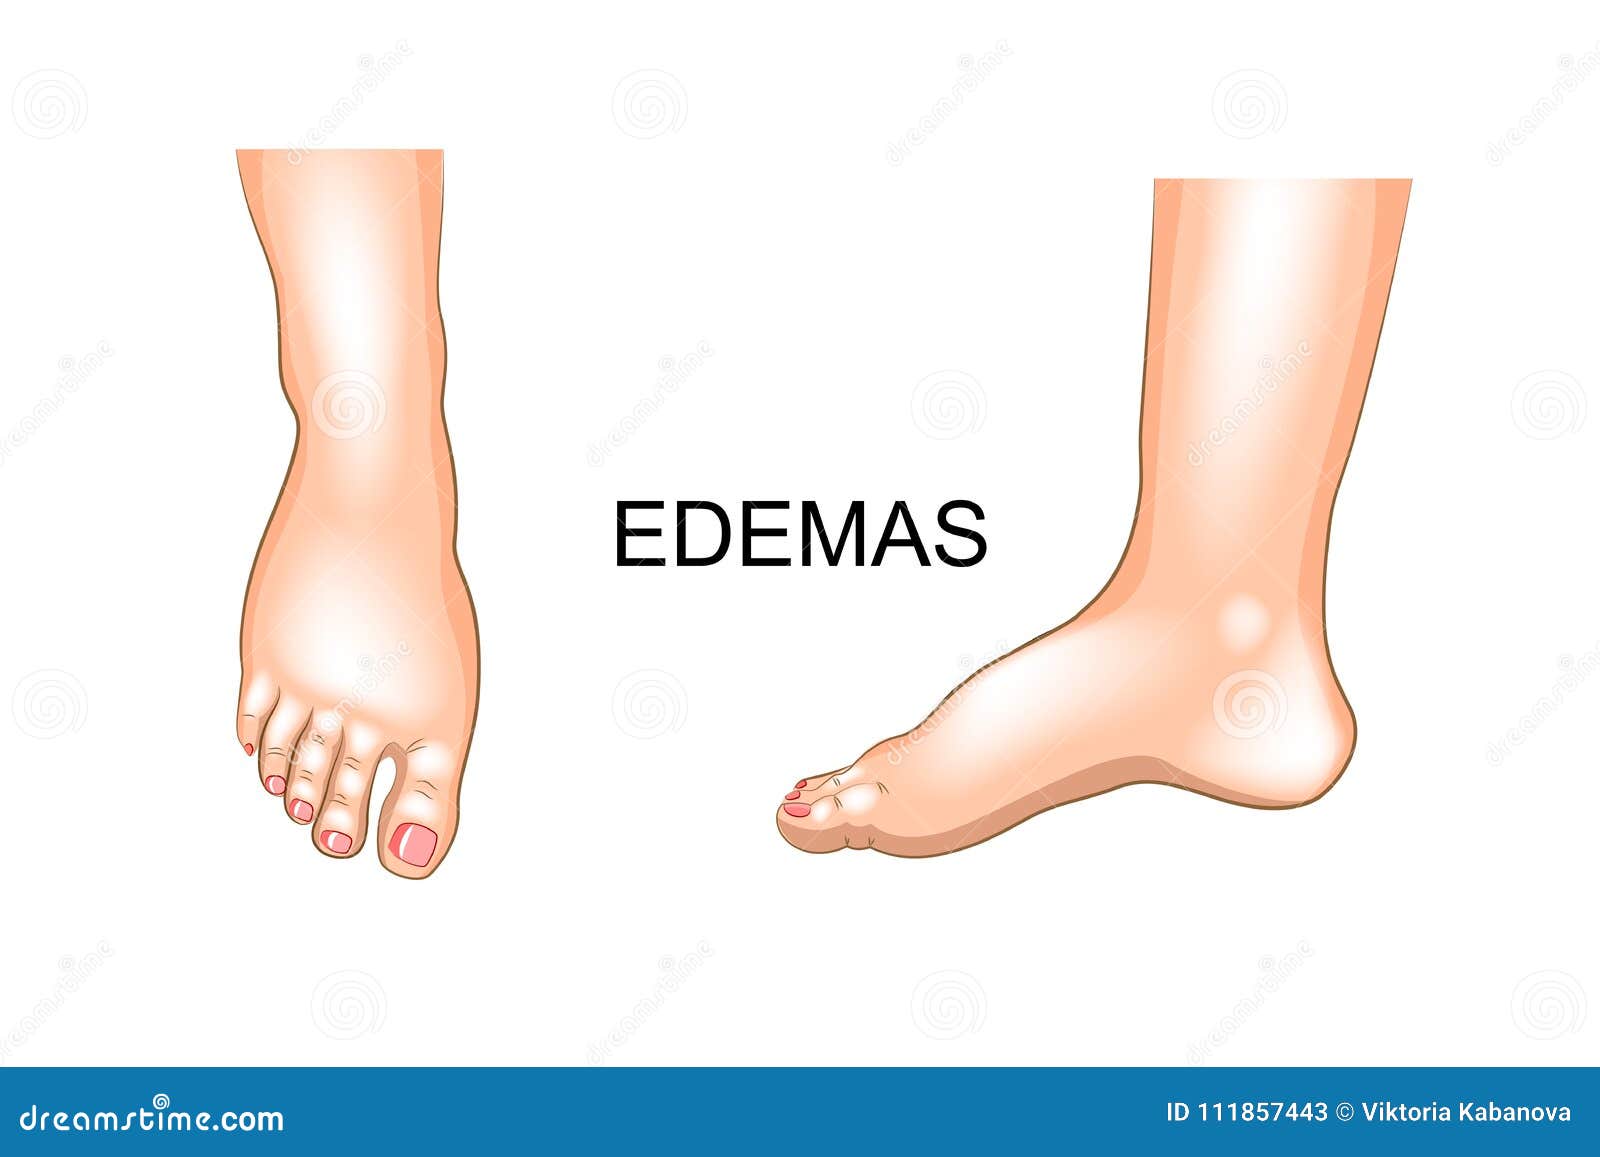 foot swelling. edema